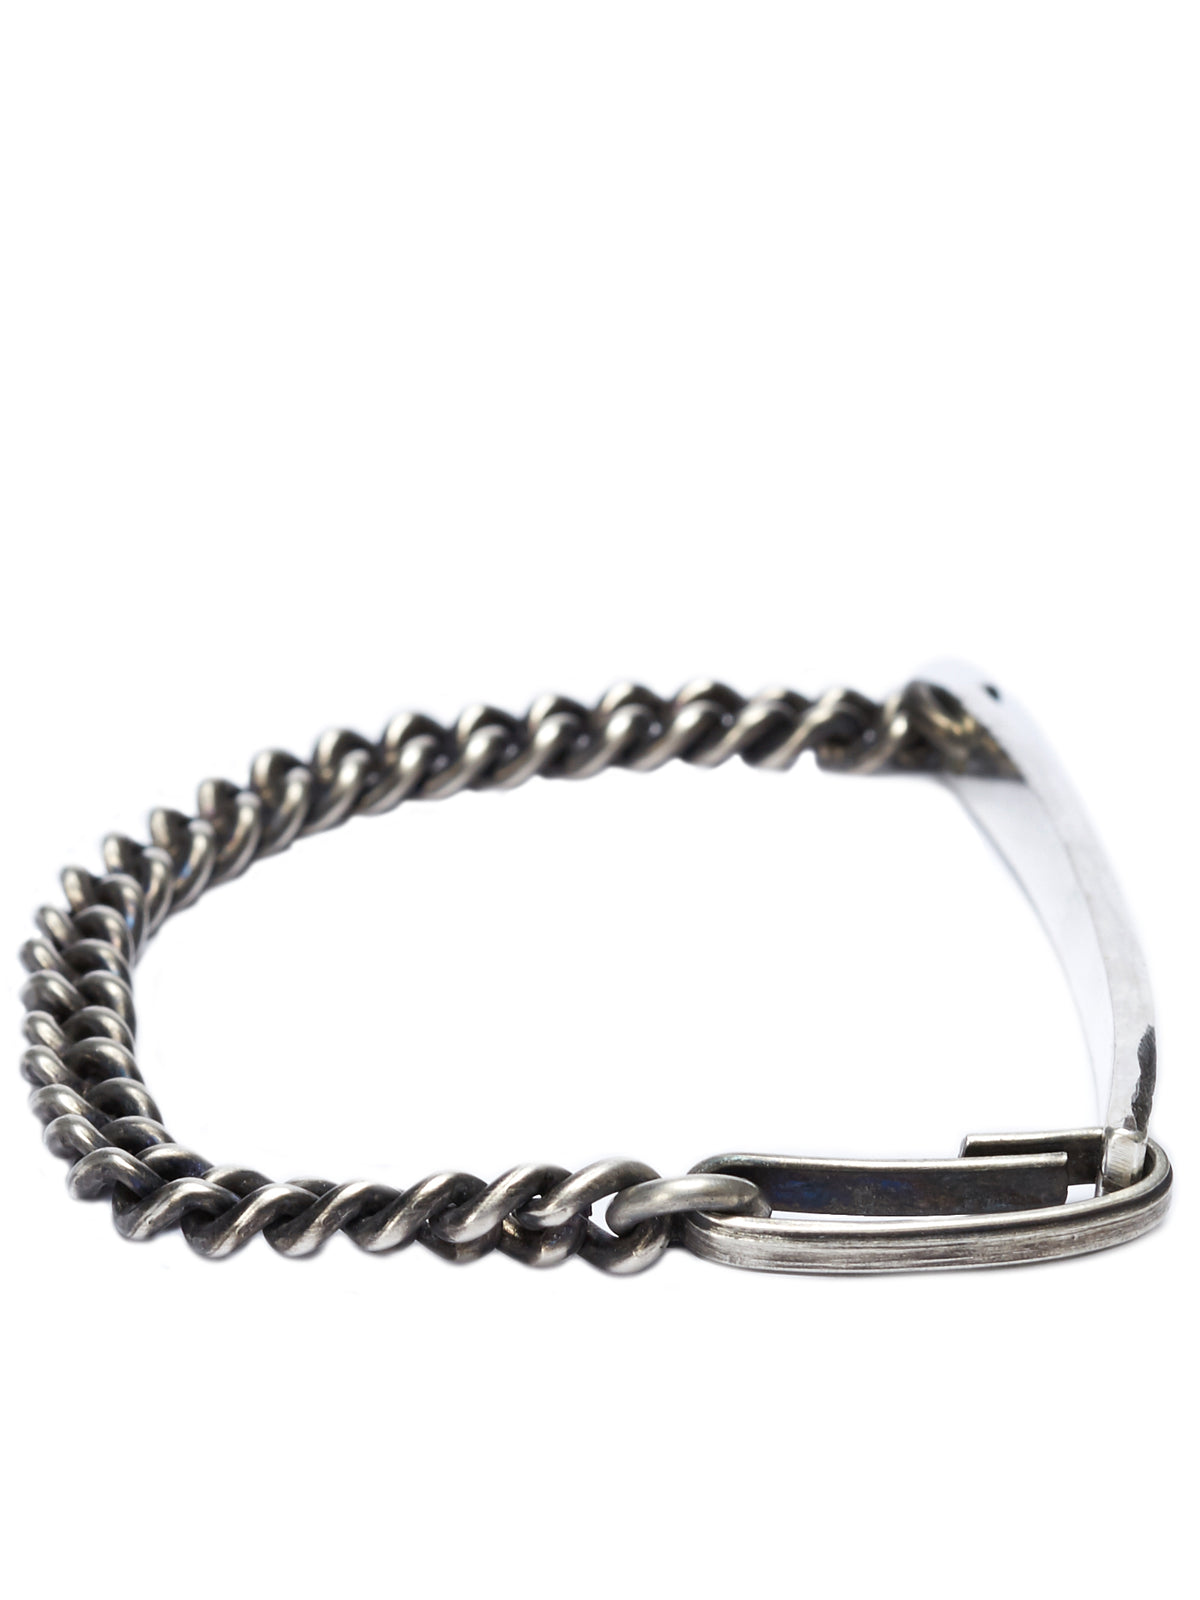 Snap Link Bracelet (M2653-SILVER)